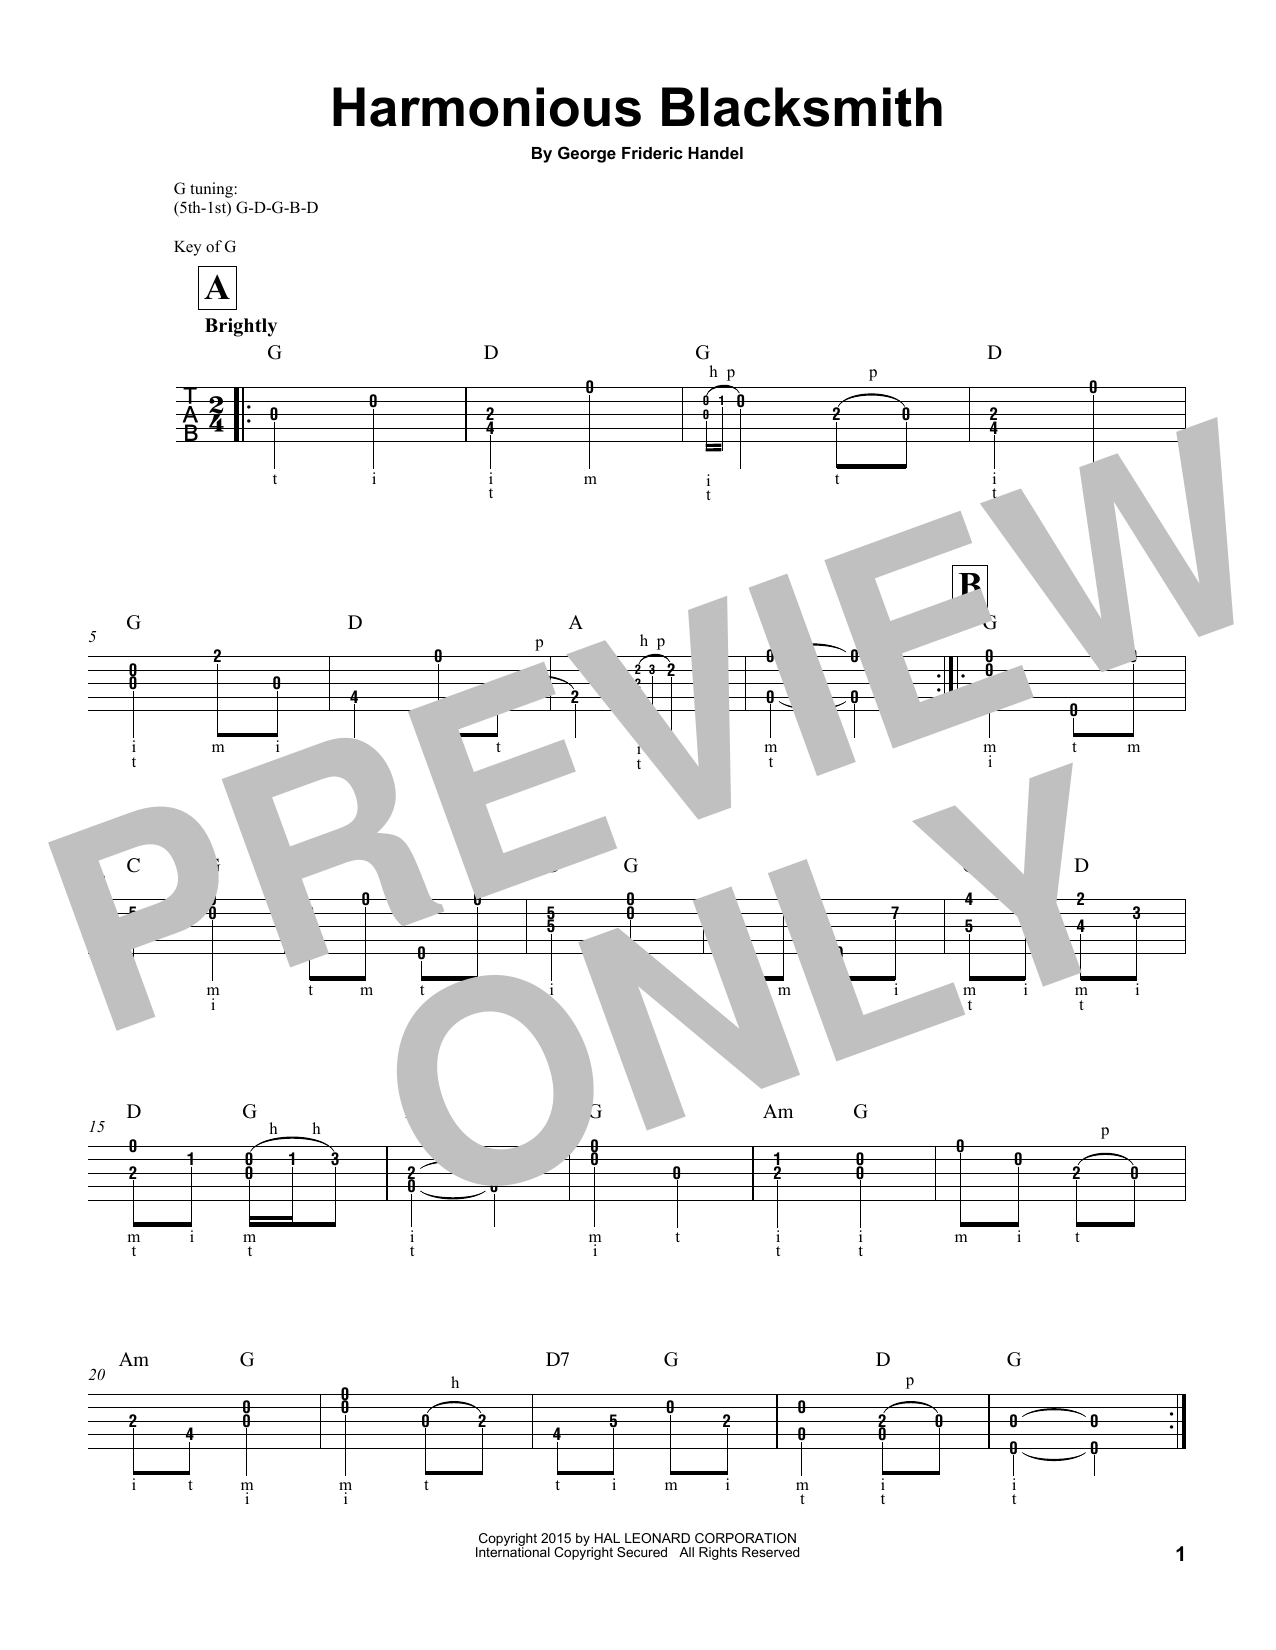 George Frideric Handel Harmonious Blacksmith Sheet Music Notes & Chords for Viola - Download or Print PDF